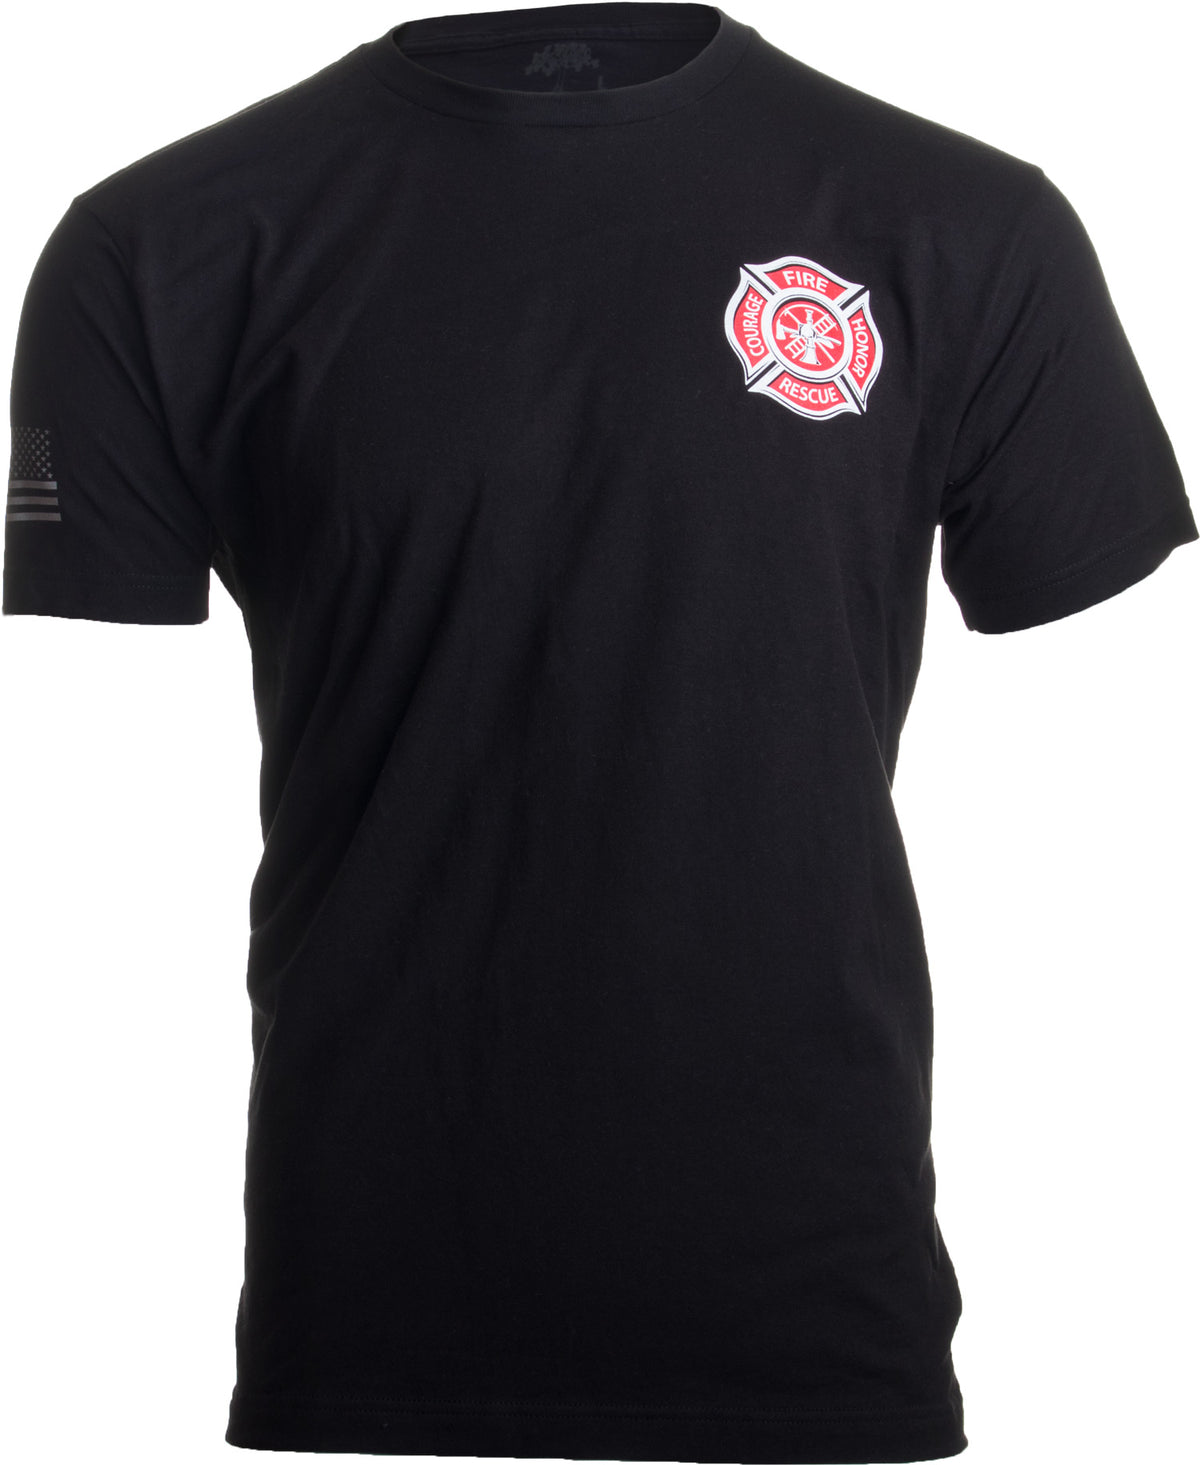 Fire & Rescue Maltese Cross | Firefighter Fire Courage Honor Men Women T-shirt